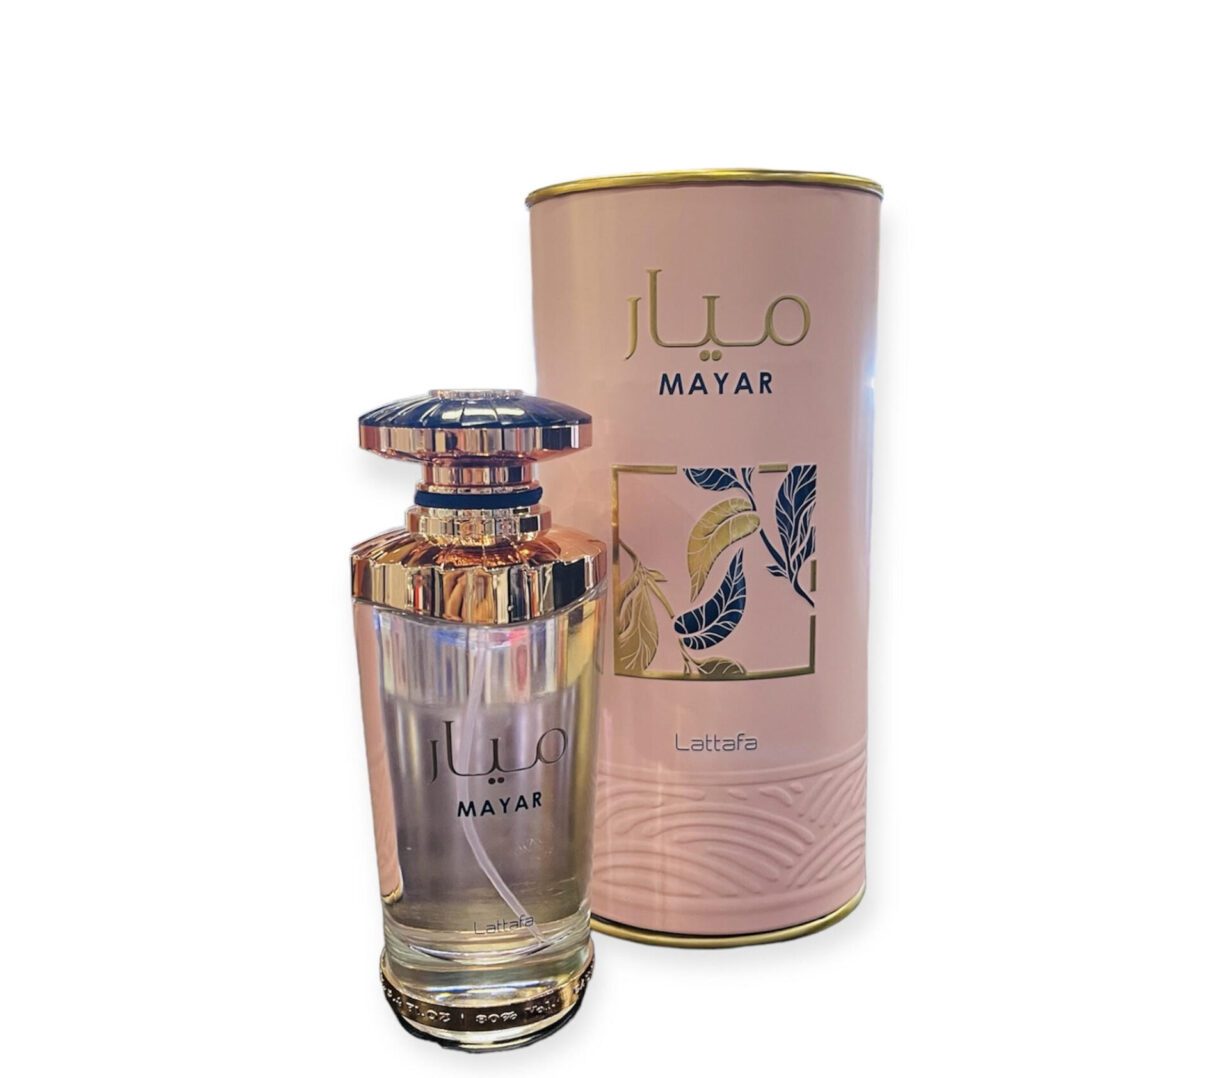 Mayar perfume bottle and box by Lattafa.